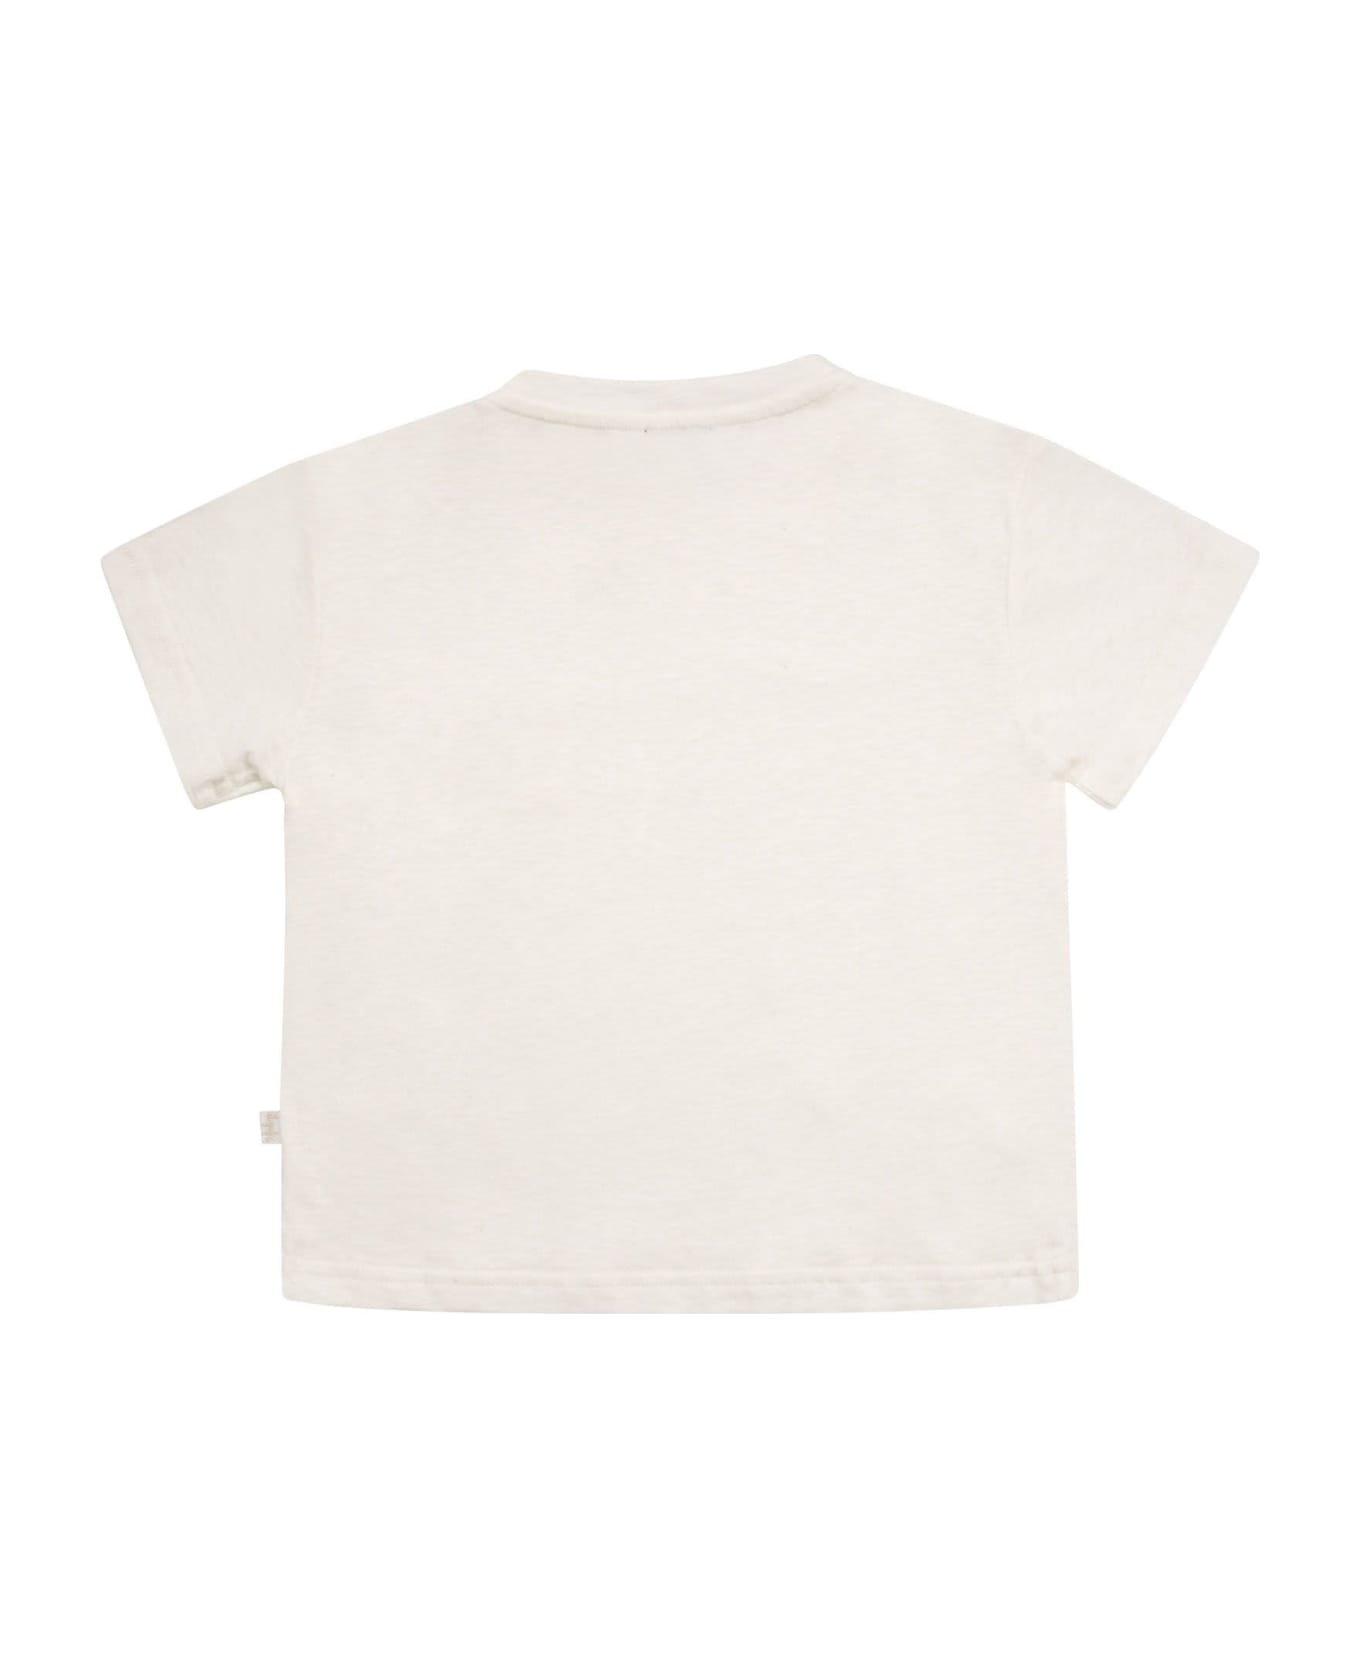 Il Gufo White Cotton And Linen T-shirt - Milk